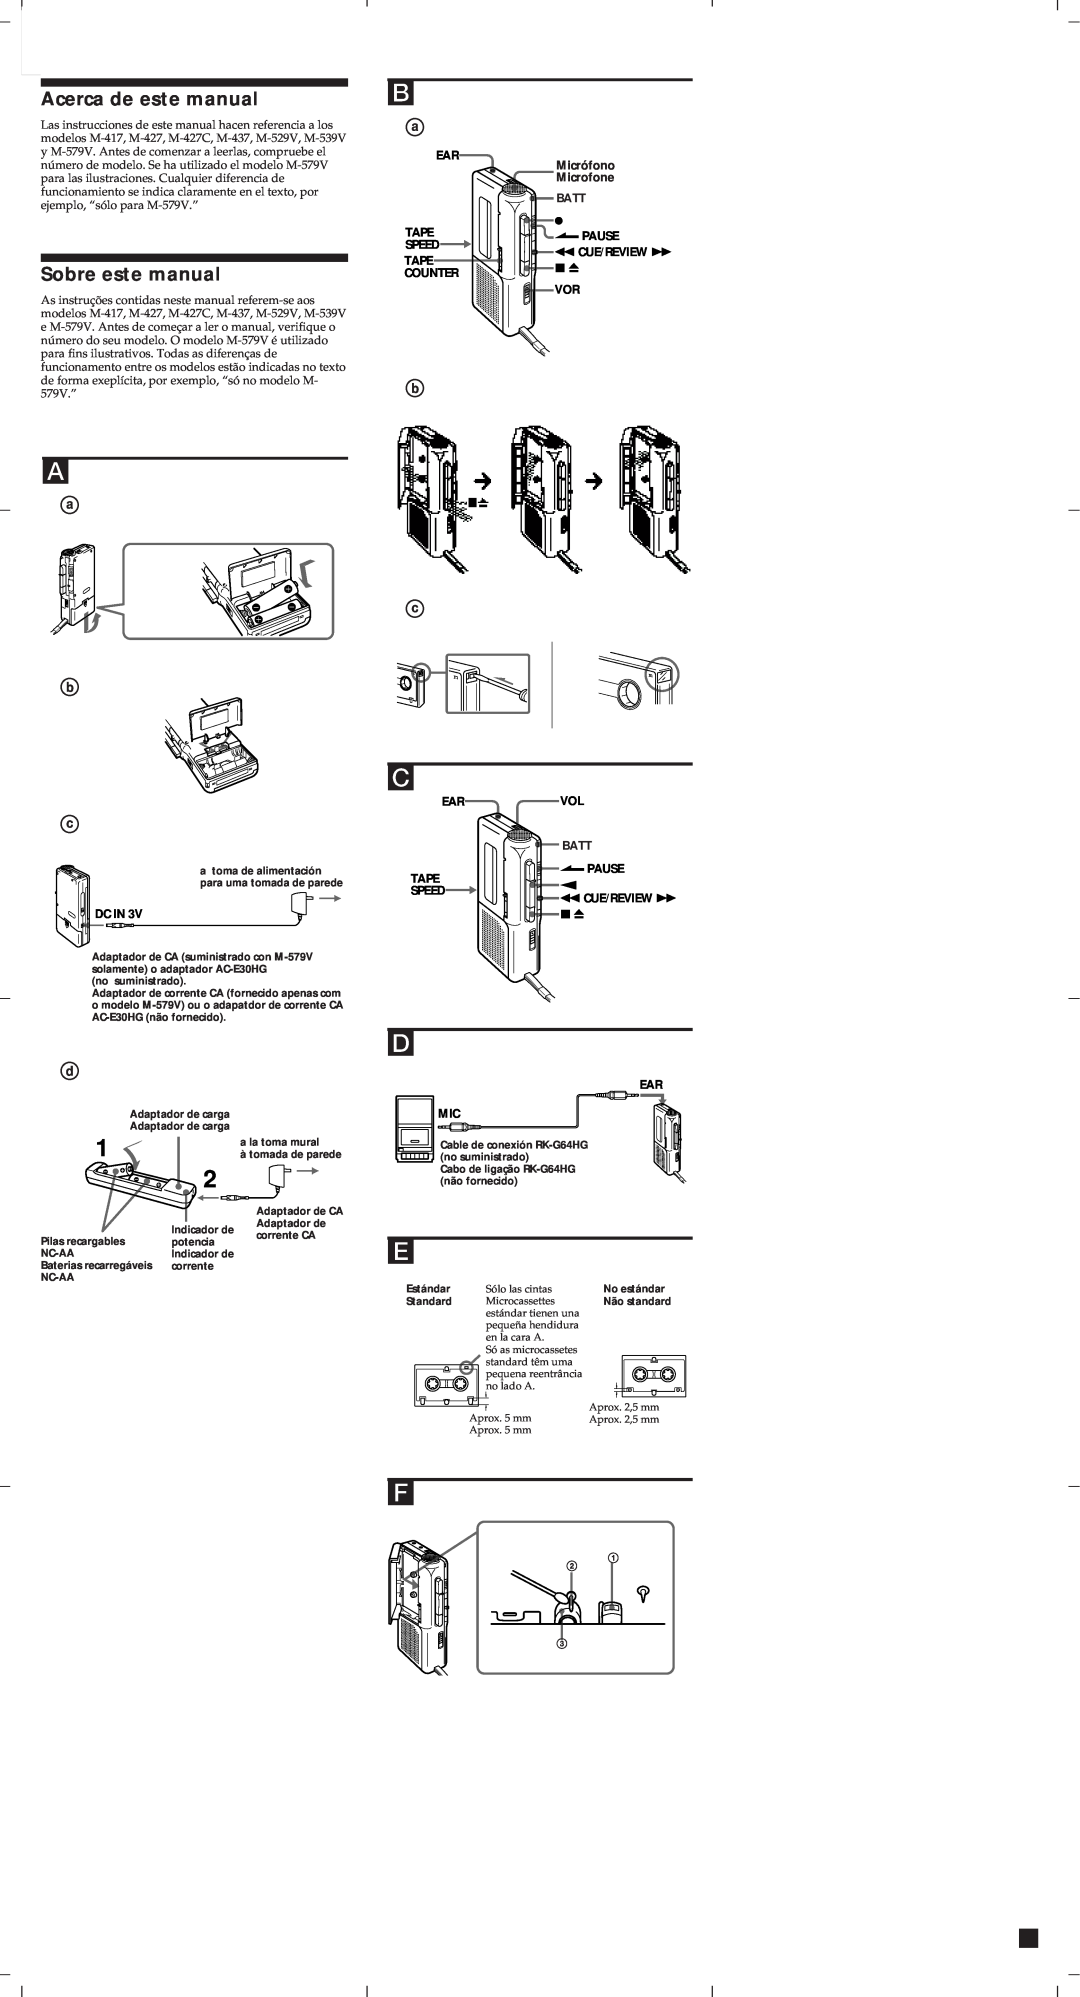 Sony 579V Acerca de este manual, Sobre este manual, a toma de alimentación para uma tomada de parede, à tomada de parede 